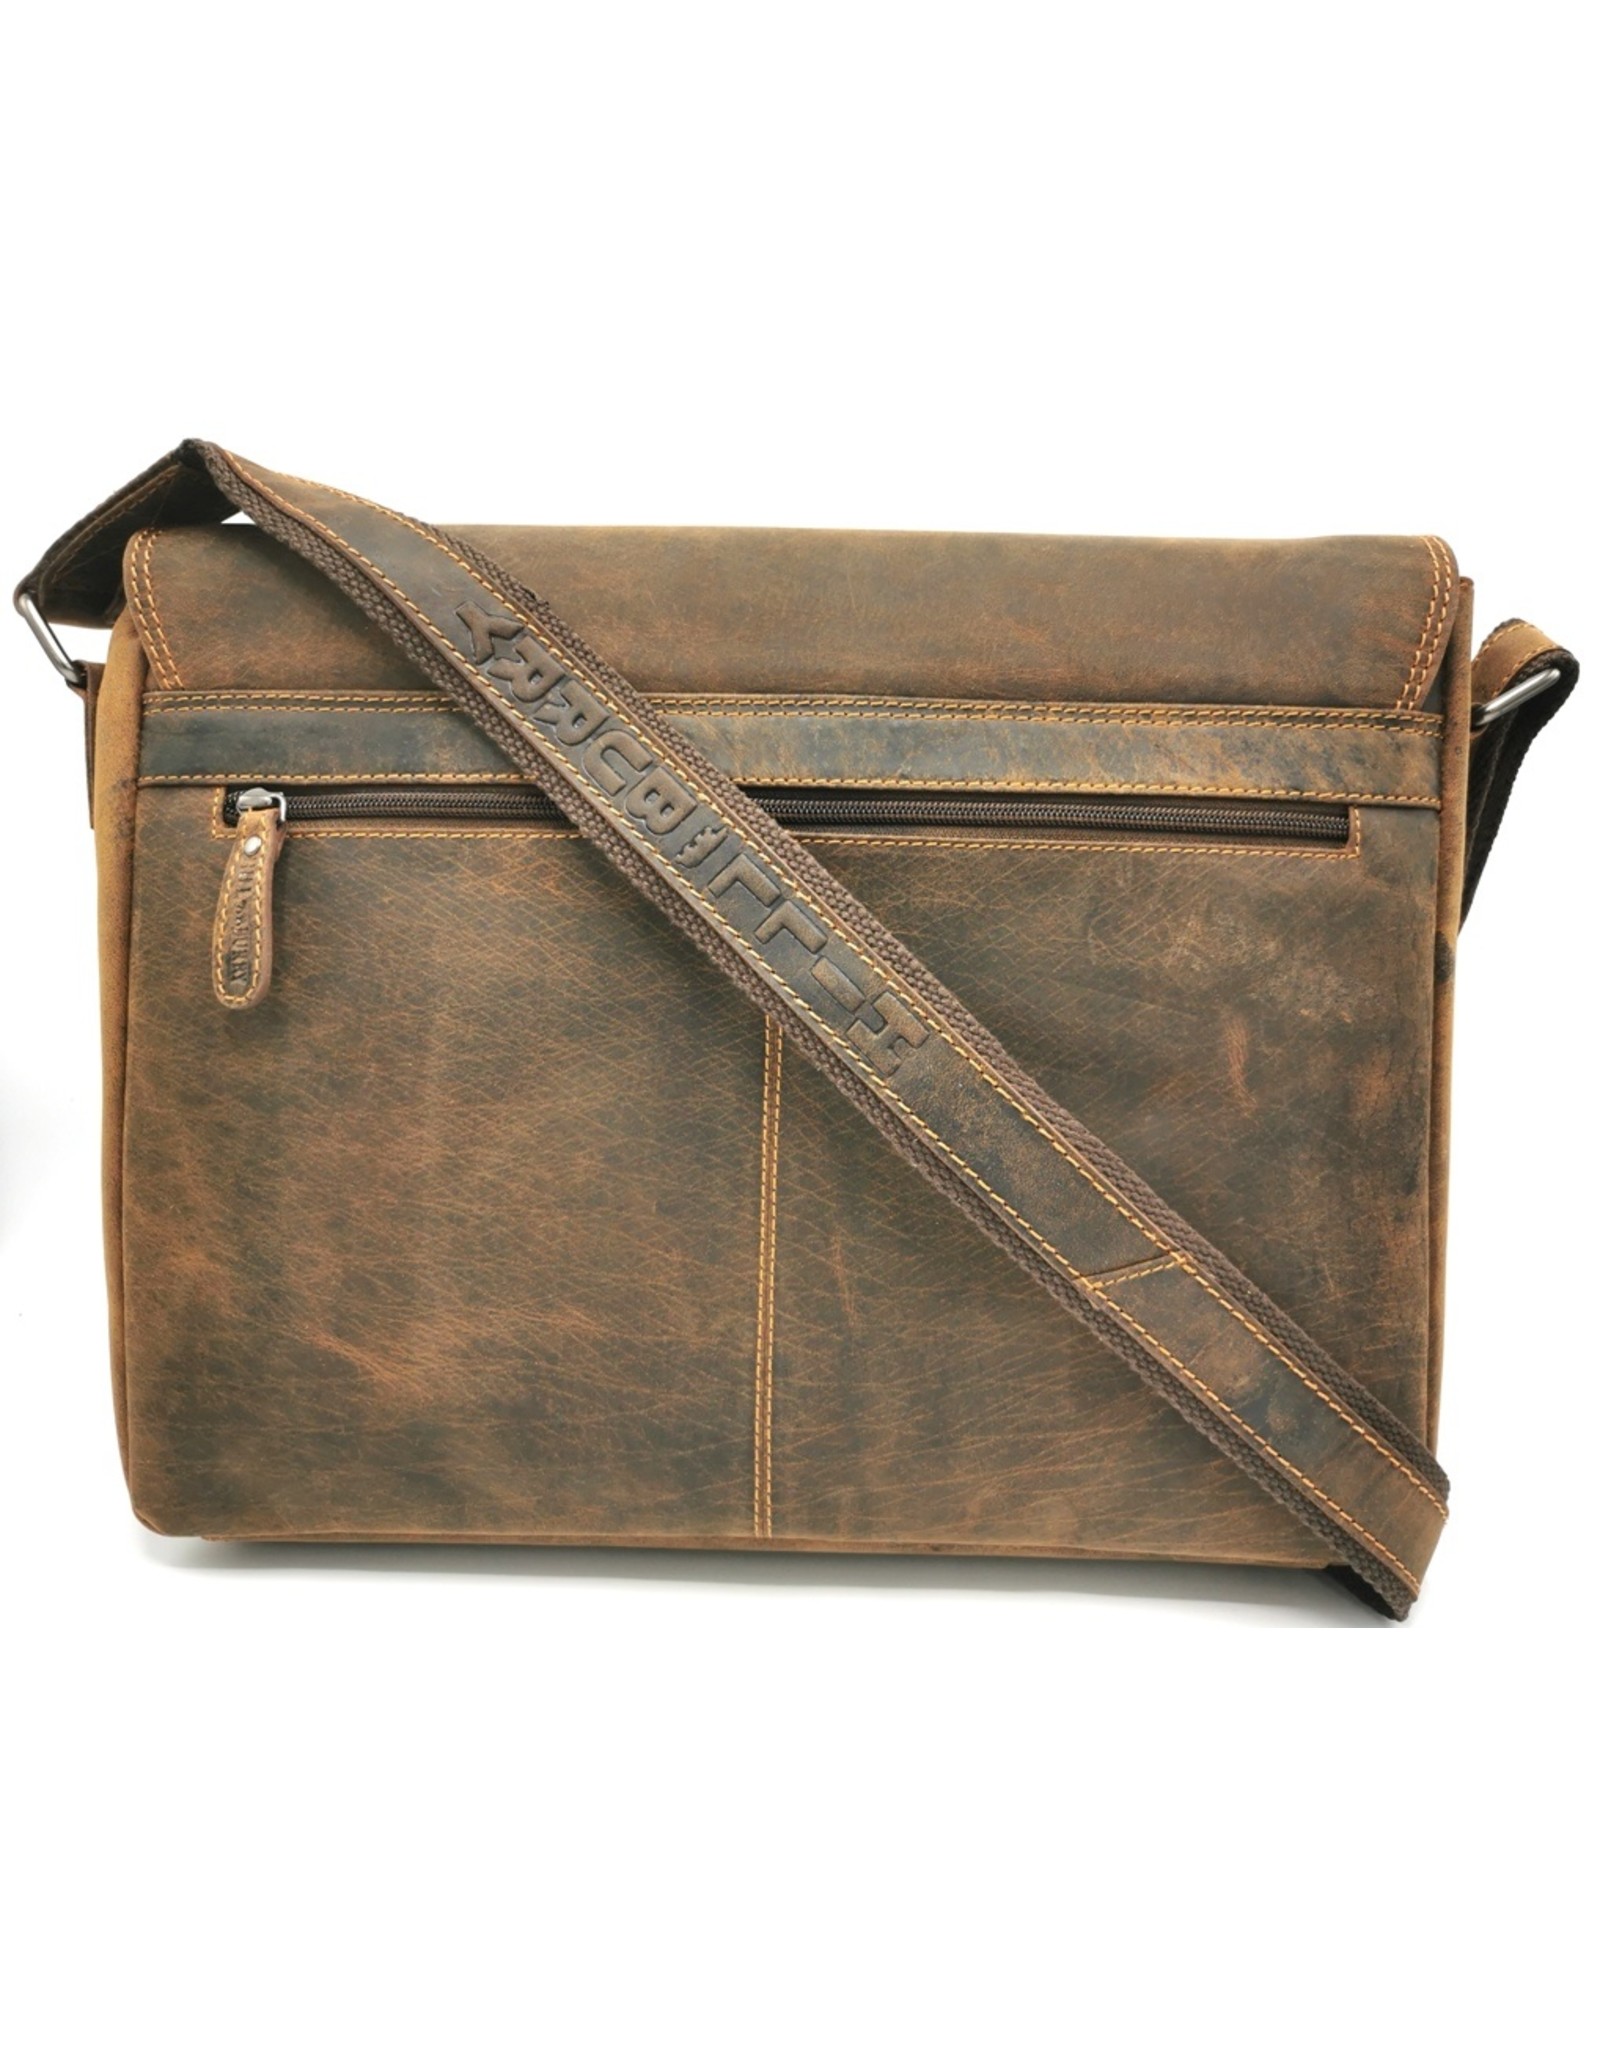 HillBurry Leather bags - HillBurry Leather Laptop bag-workbag buffalo leather 15,6"